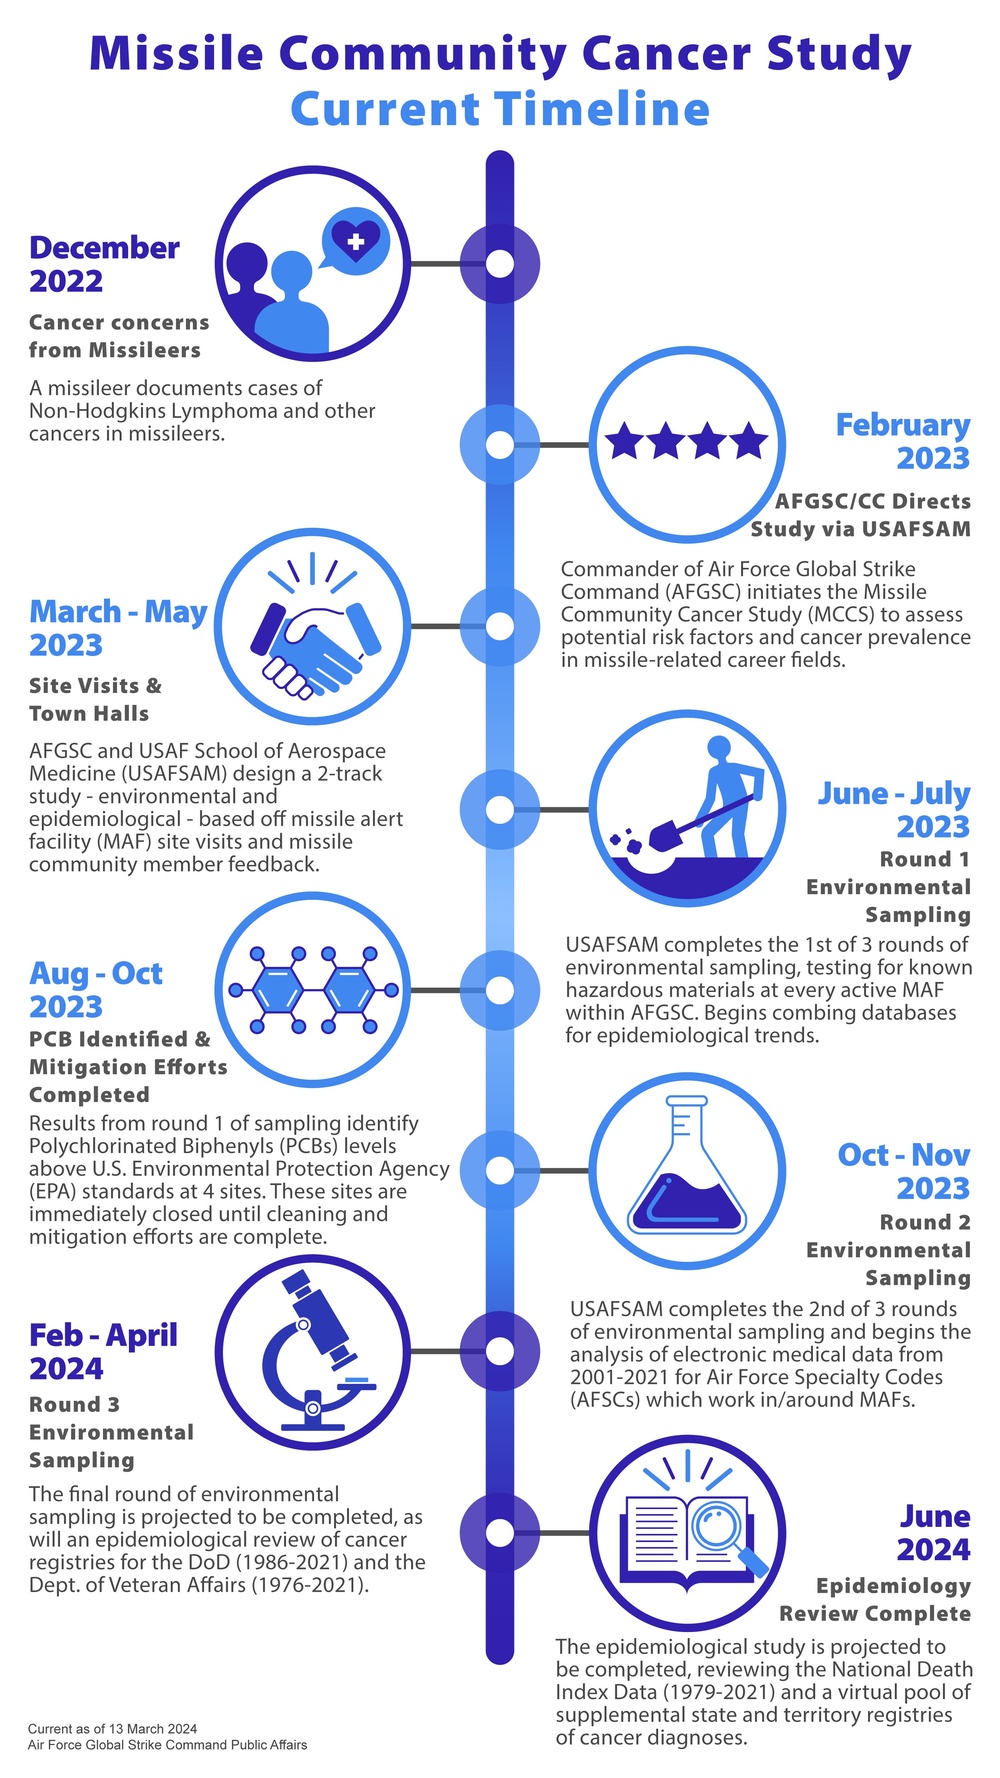 Missile Community Cancer Study Current Timeline Graphic